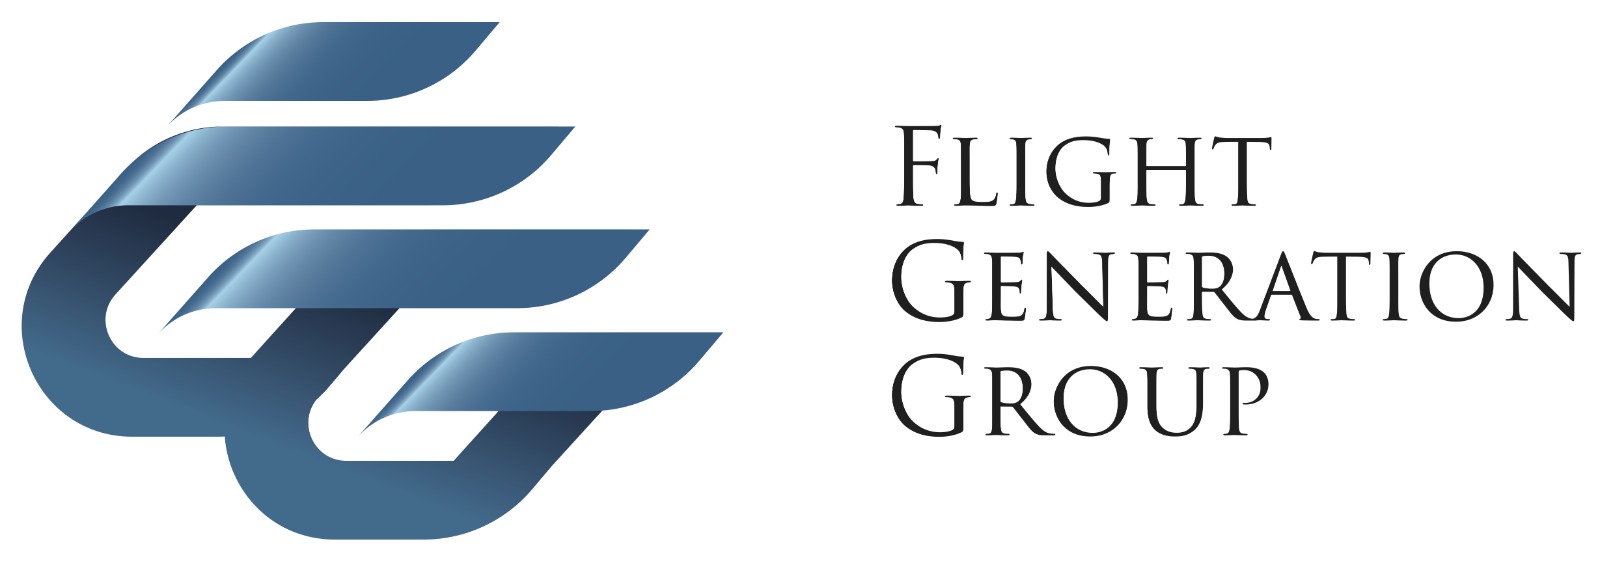 Flight Generation group